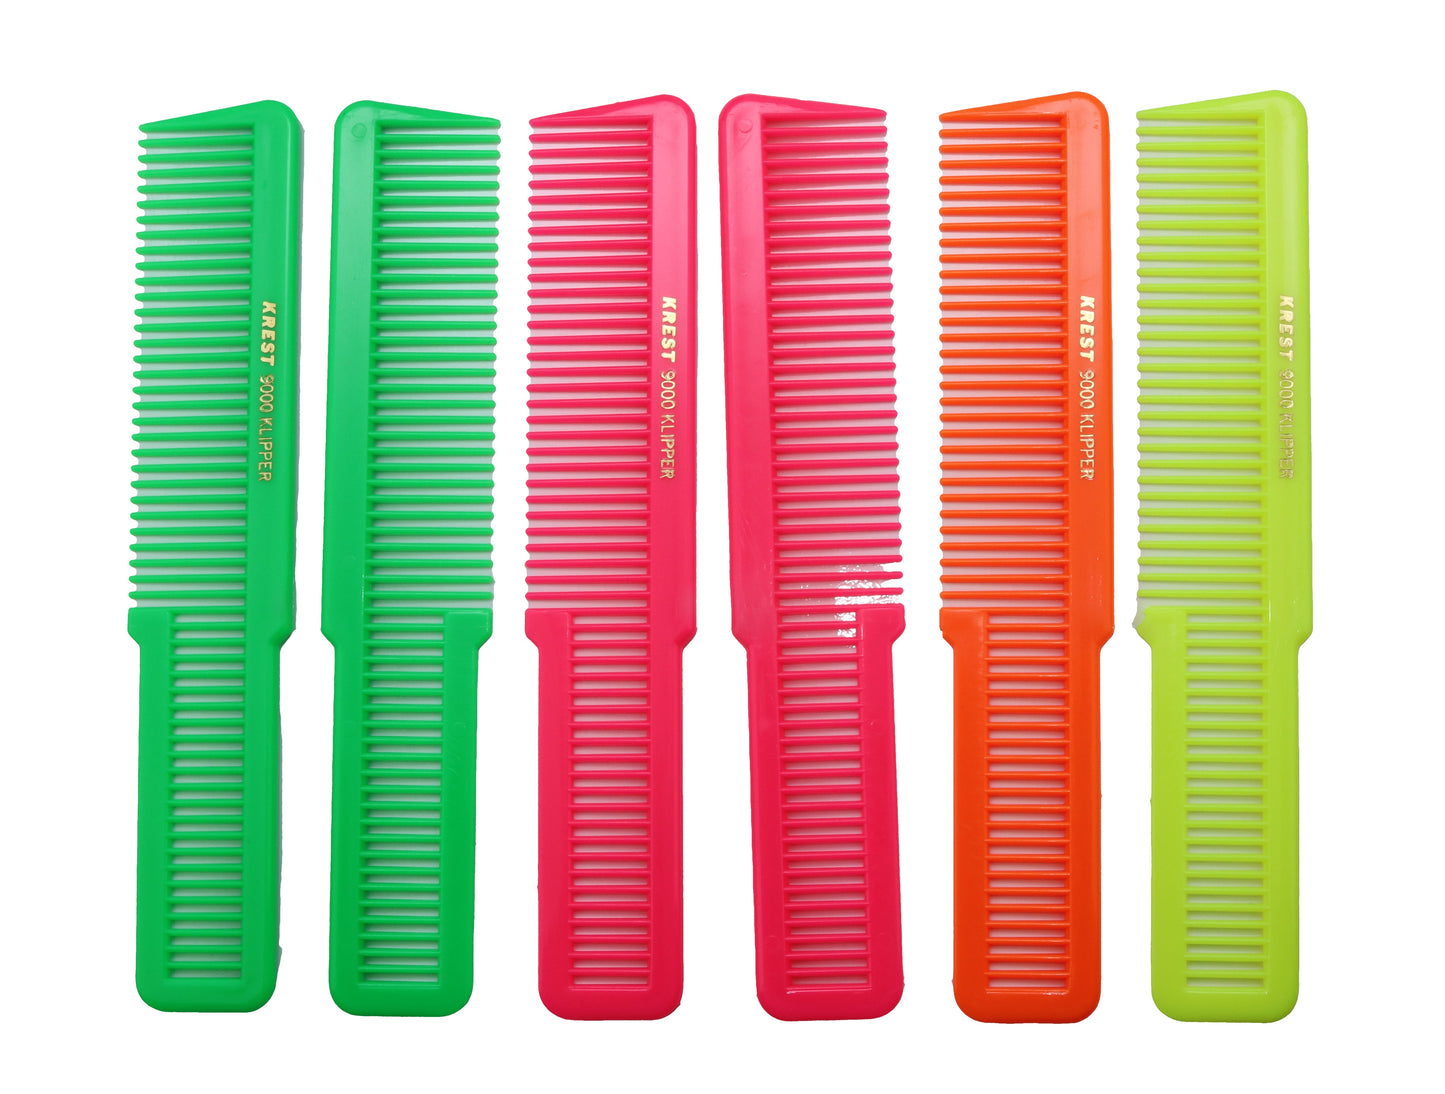 8 Inch Clipper Hair Cutting Comb. Styling Comb. Klipper Comb. Neon Mix Color. 6 Combs